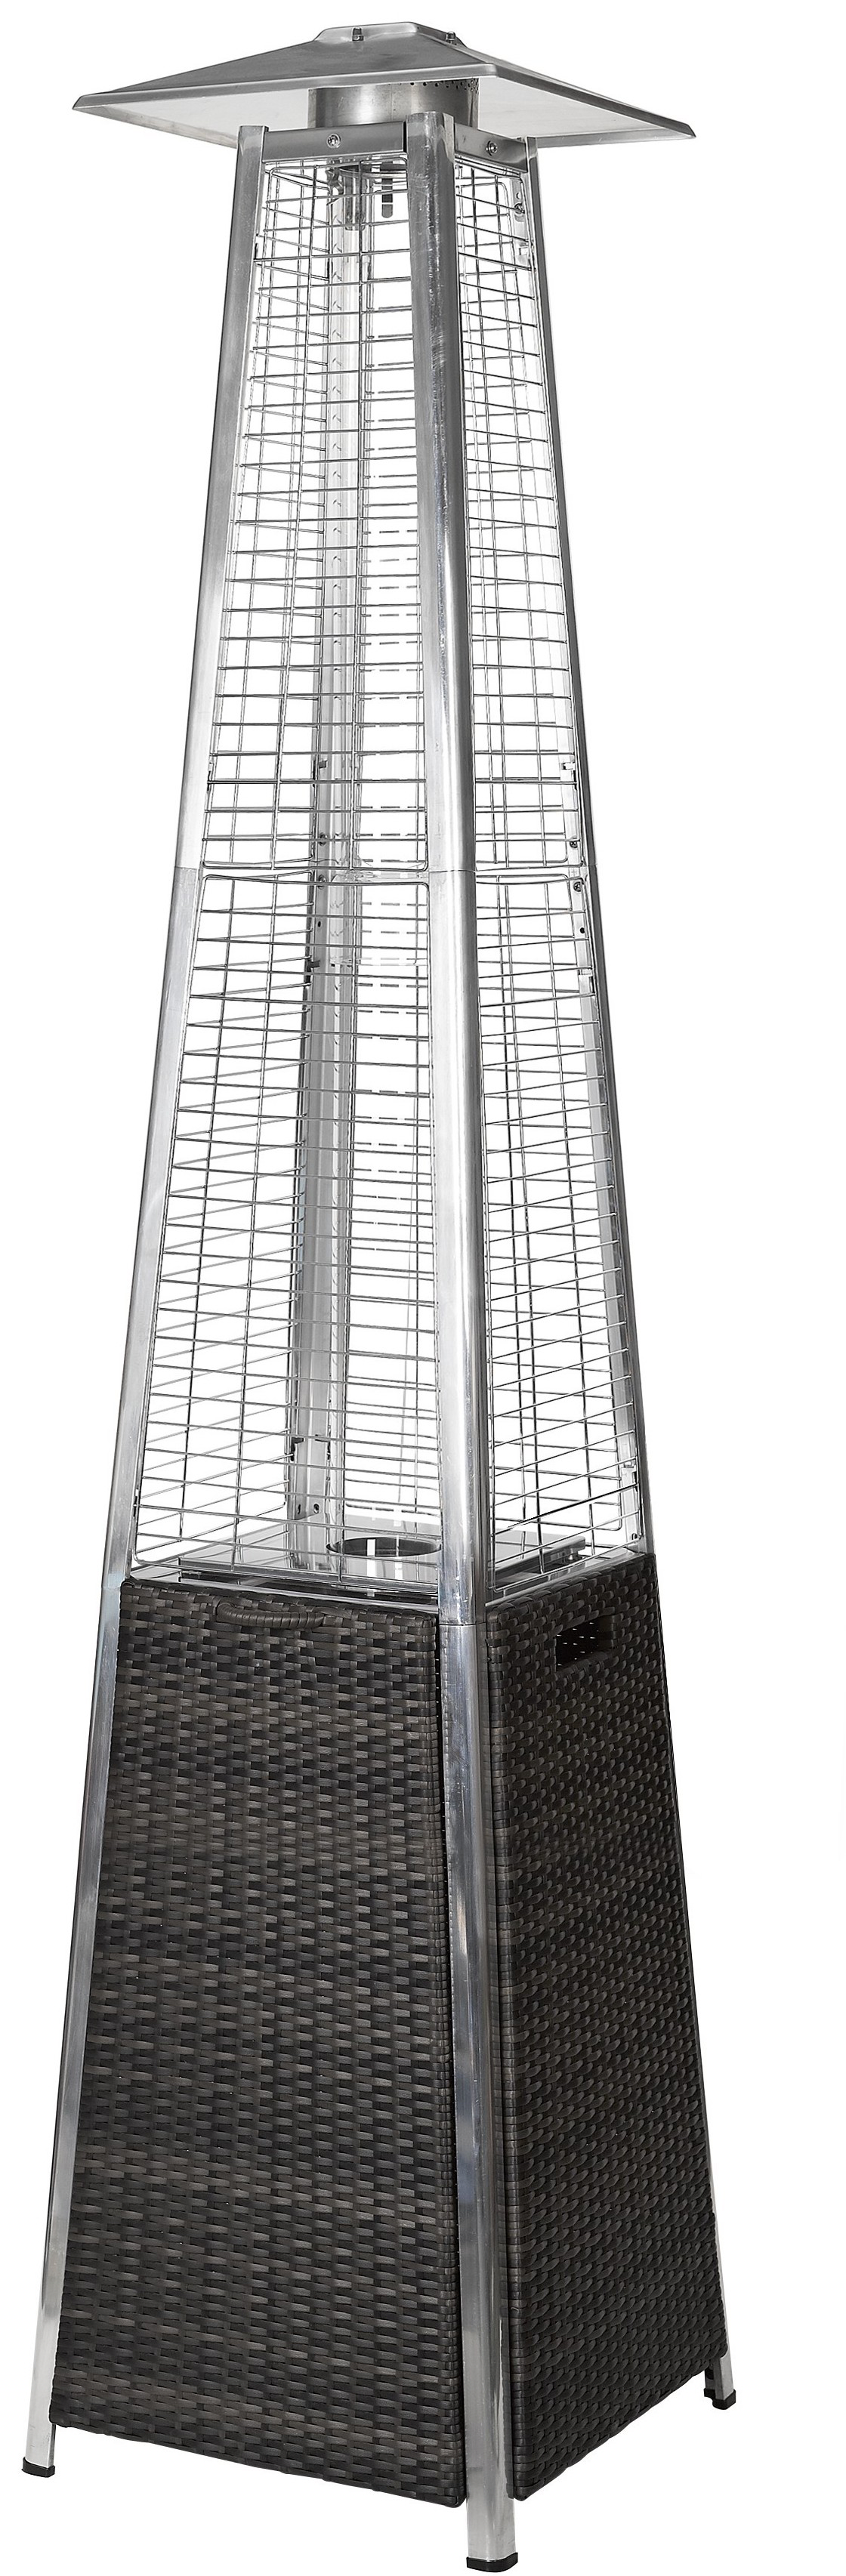 RADtec Tower Flame Propane Patio Heater